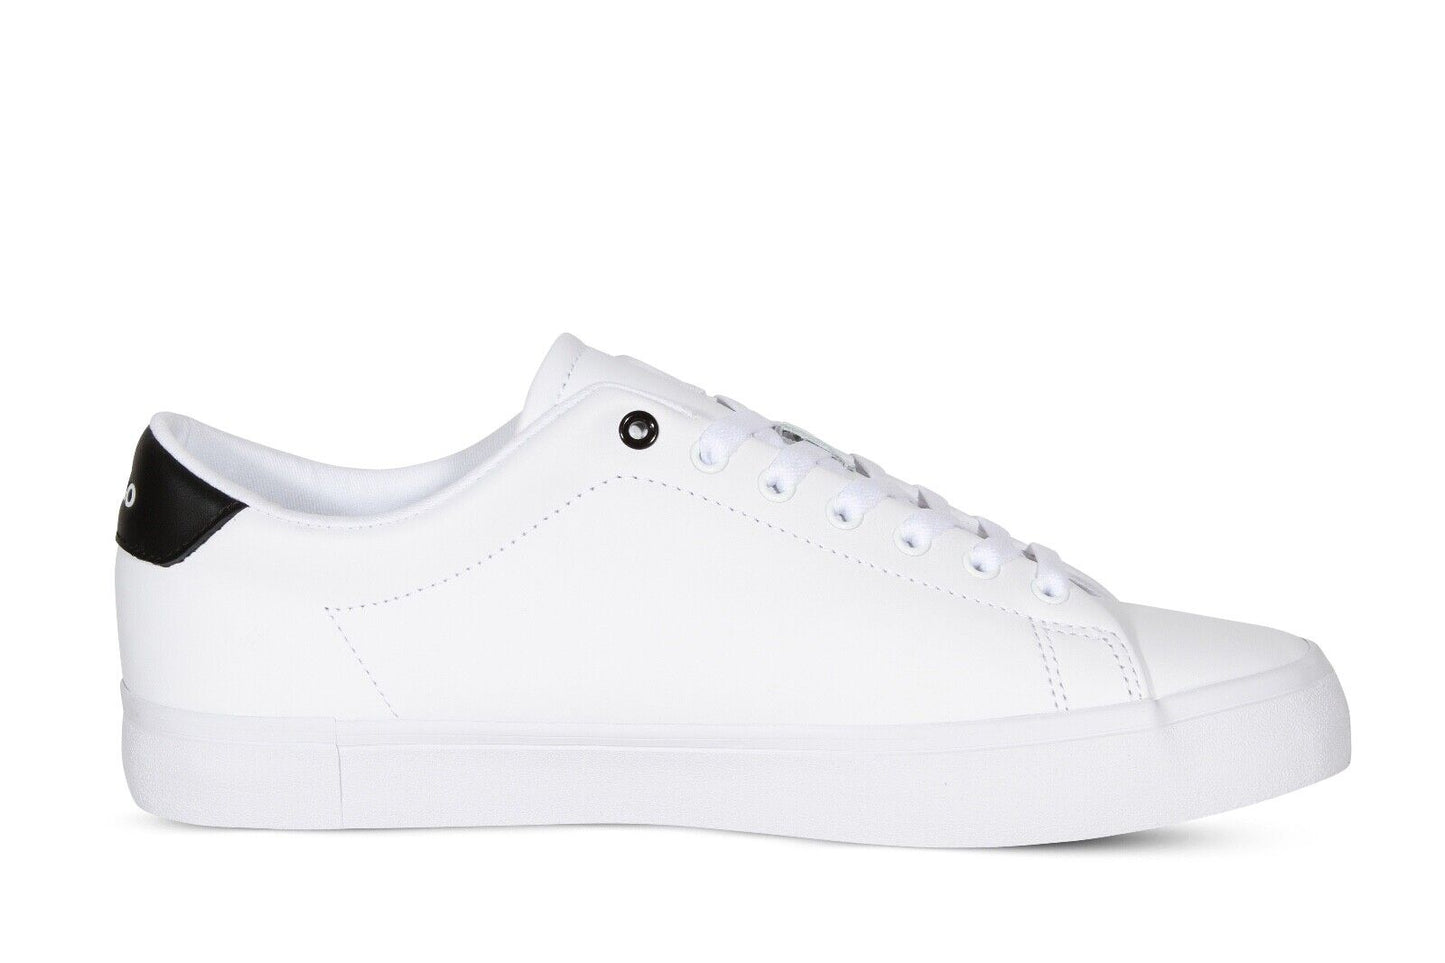 Polo Ralph Lauren Longwood Logo Men’s Sneakers in White and Black 816862547001